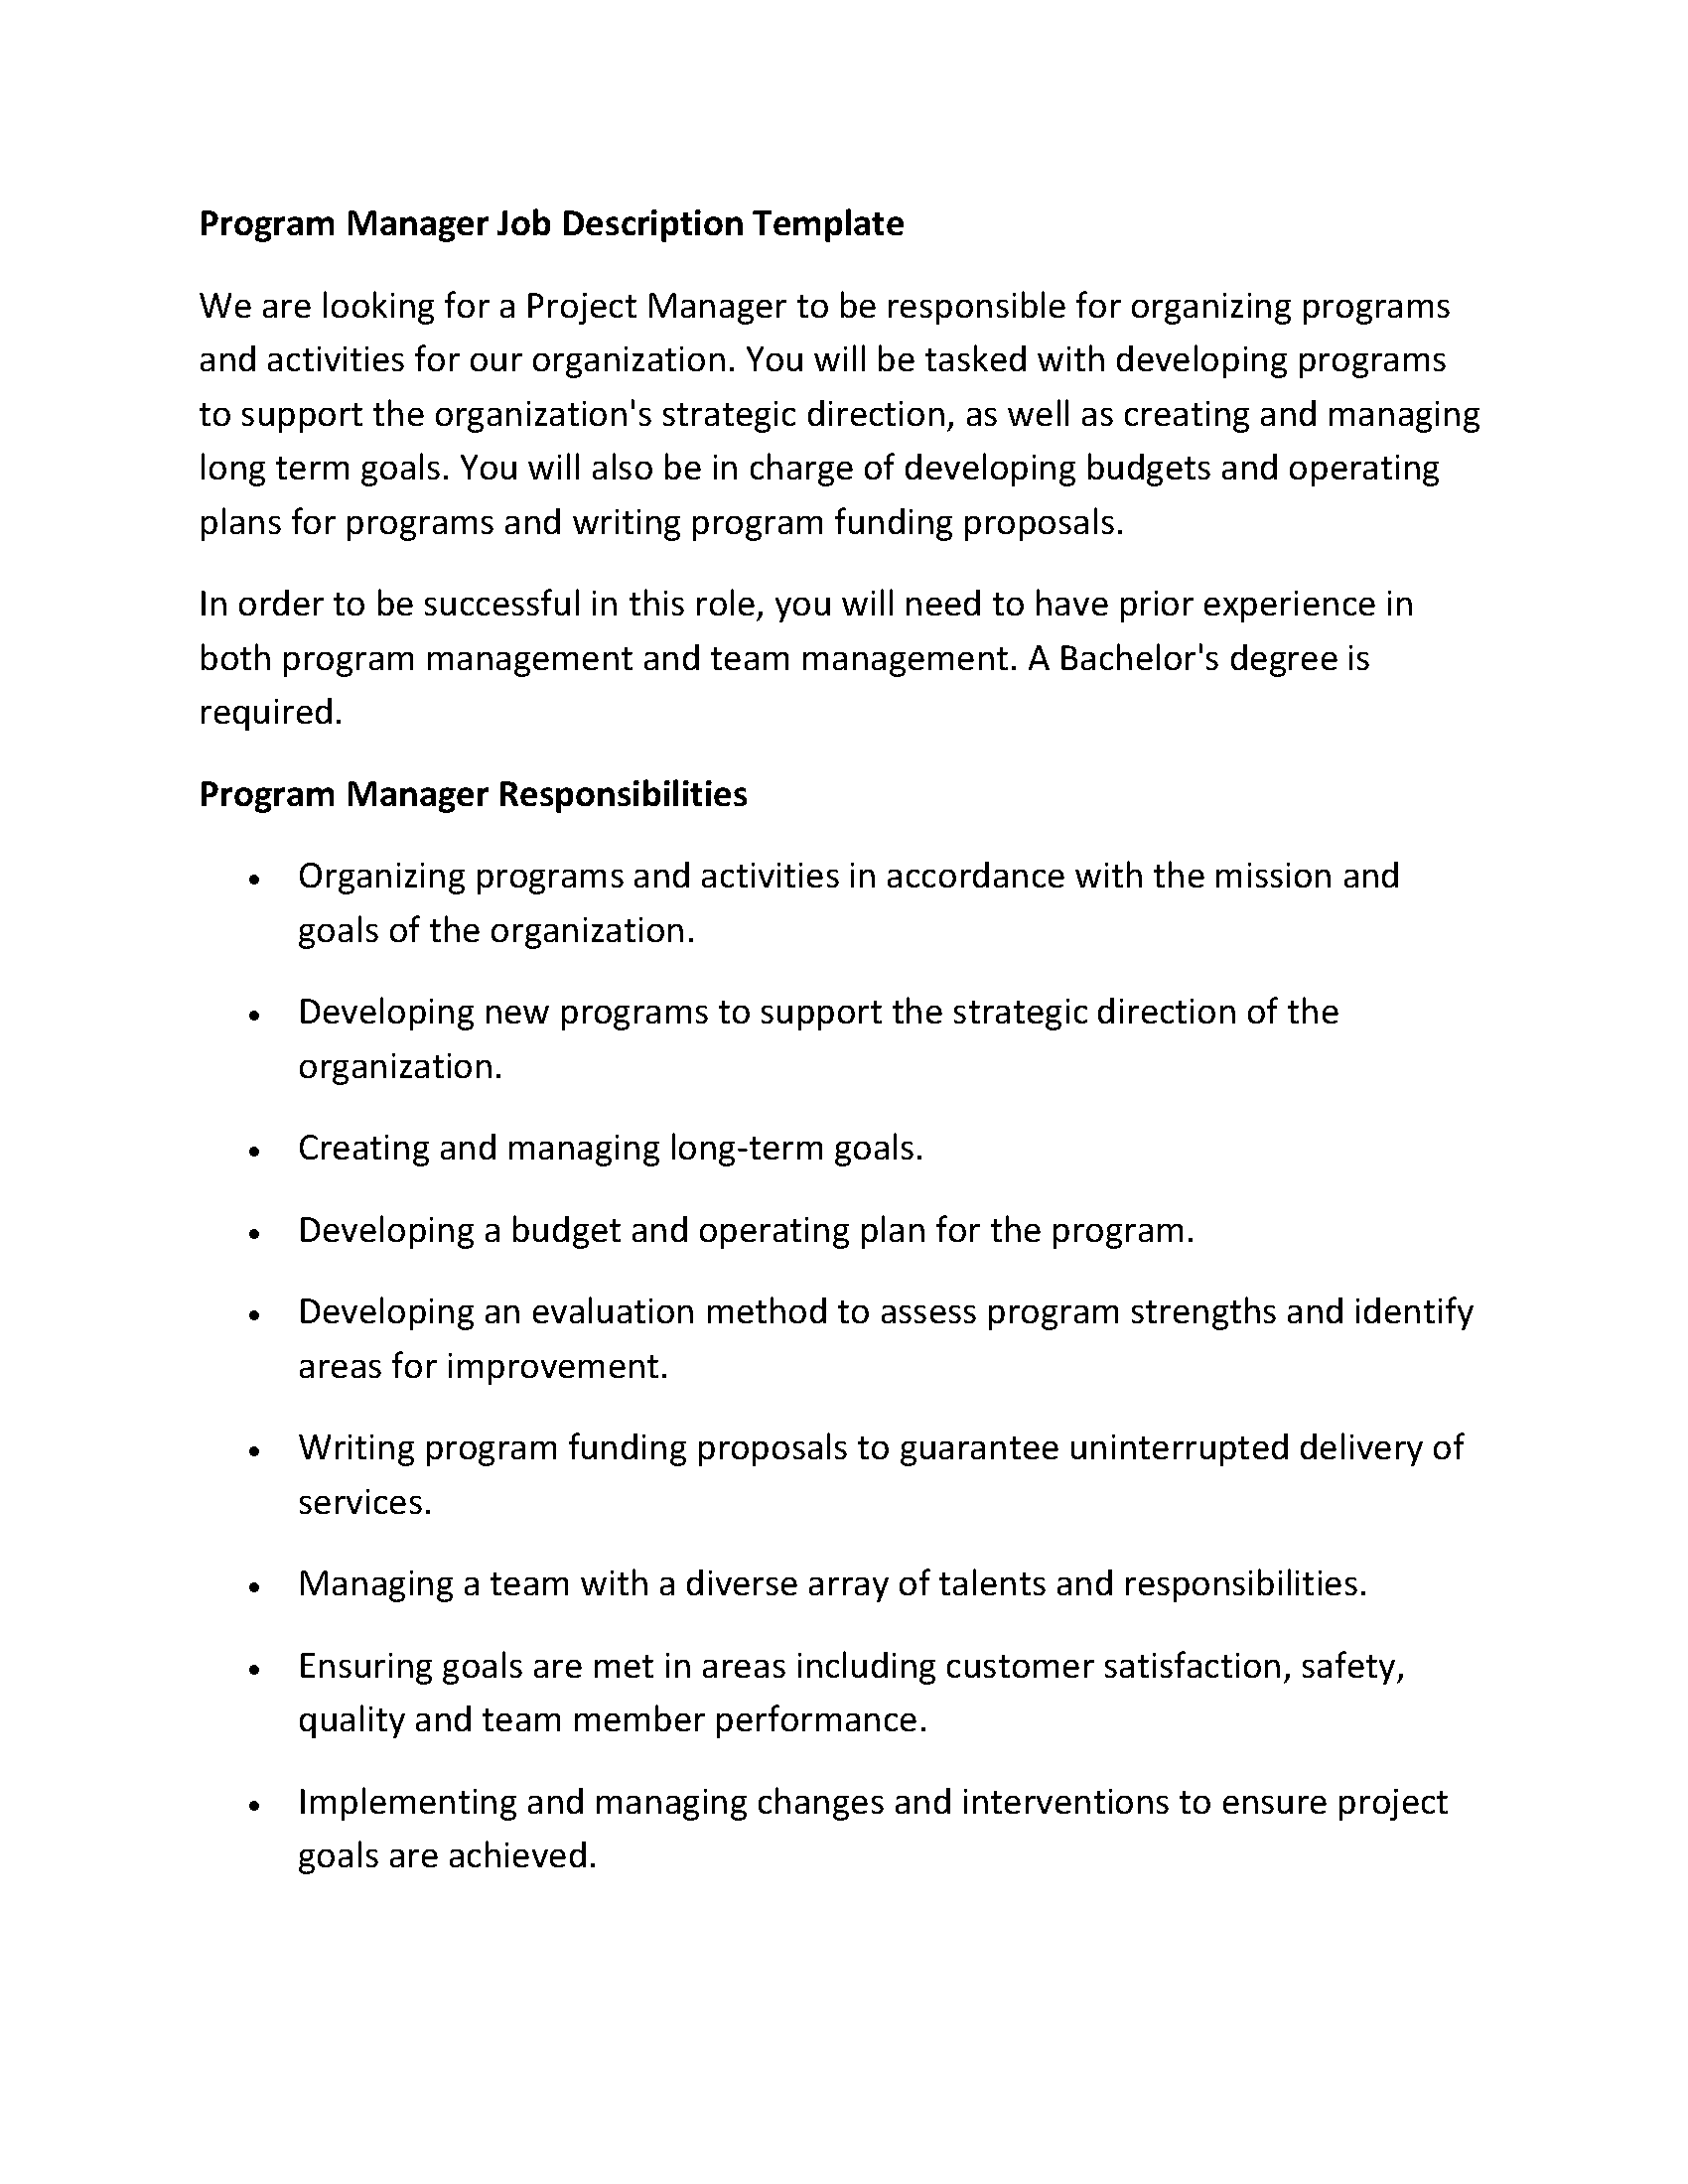 Program Manager Job Description Template